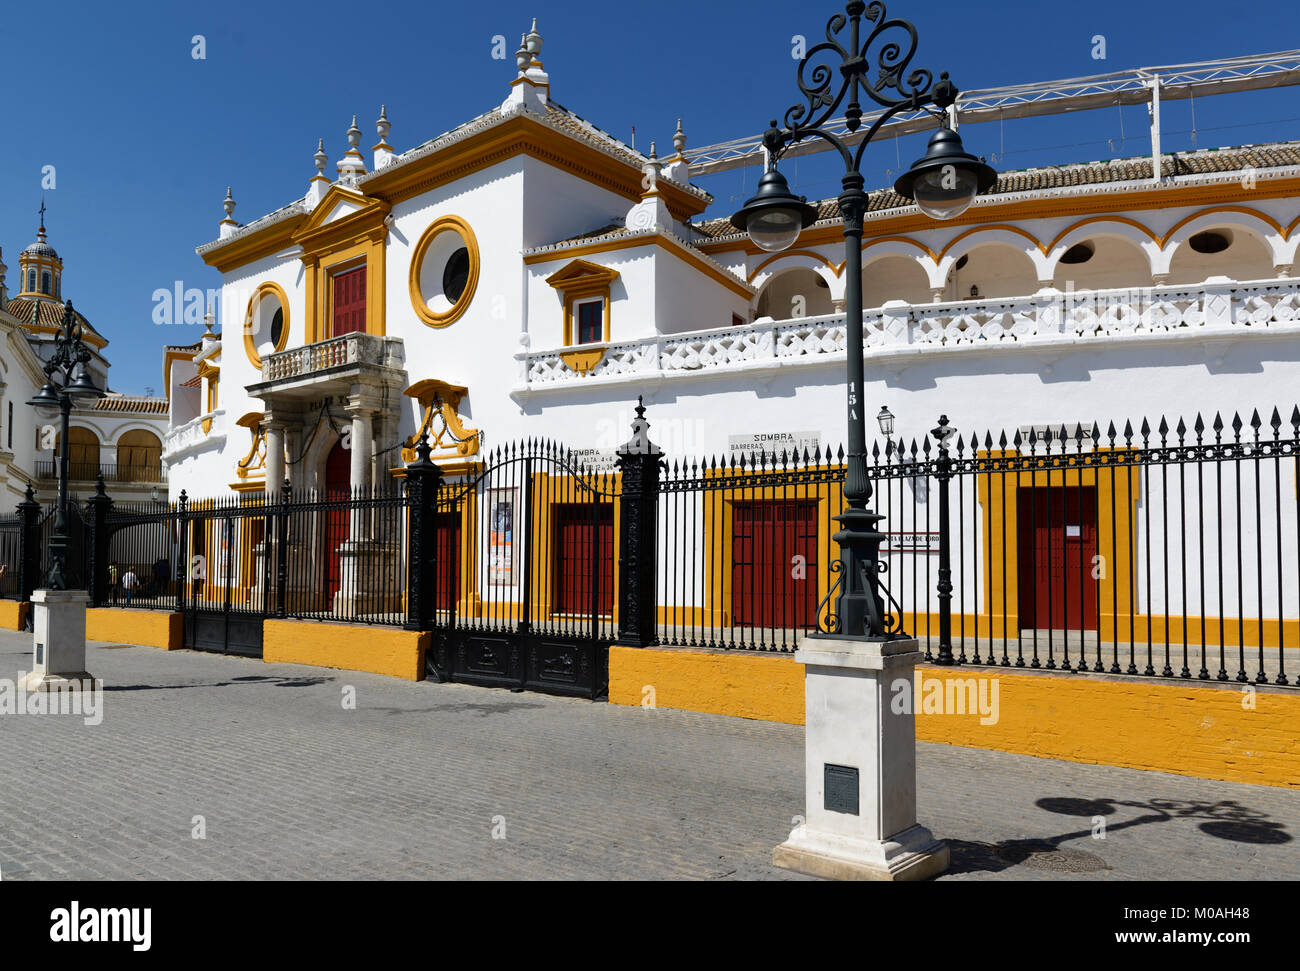 Seville, Andalusia, Spain. Plaza de Toros. Stock Photo